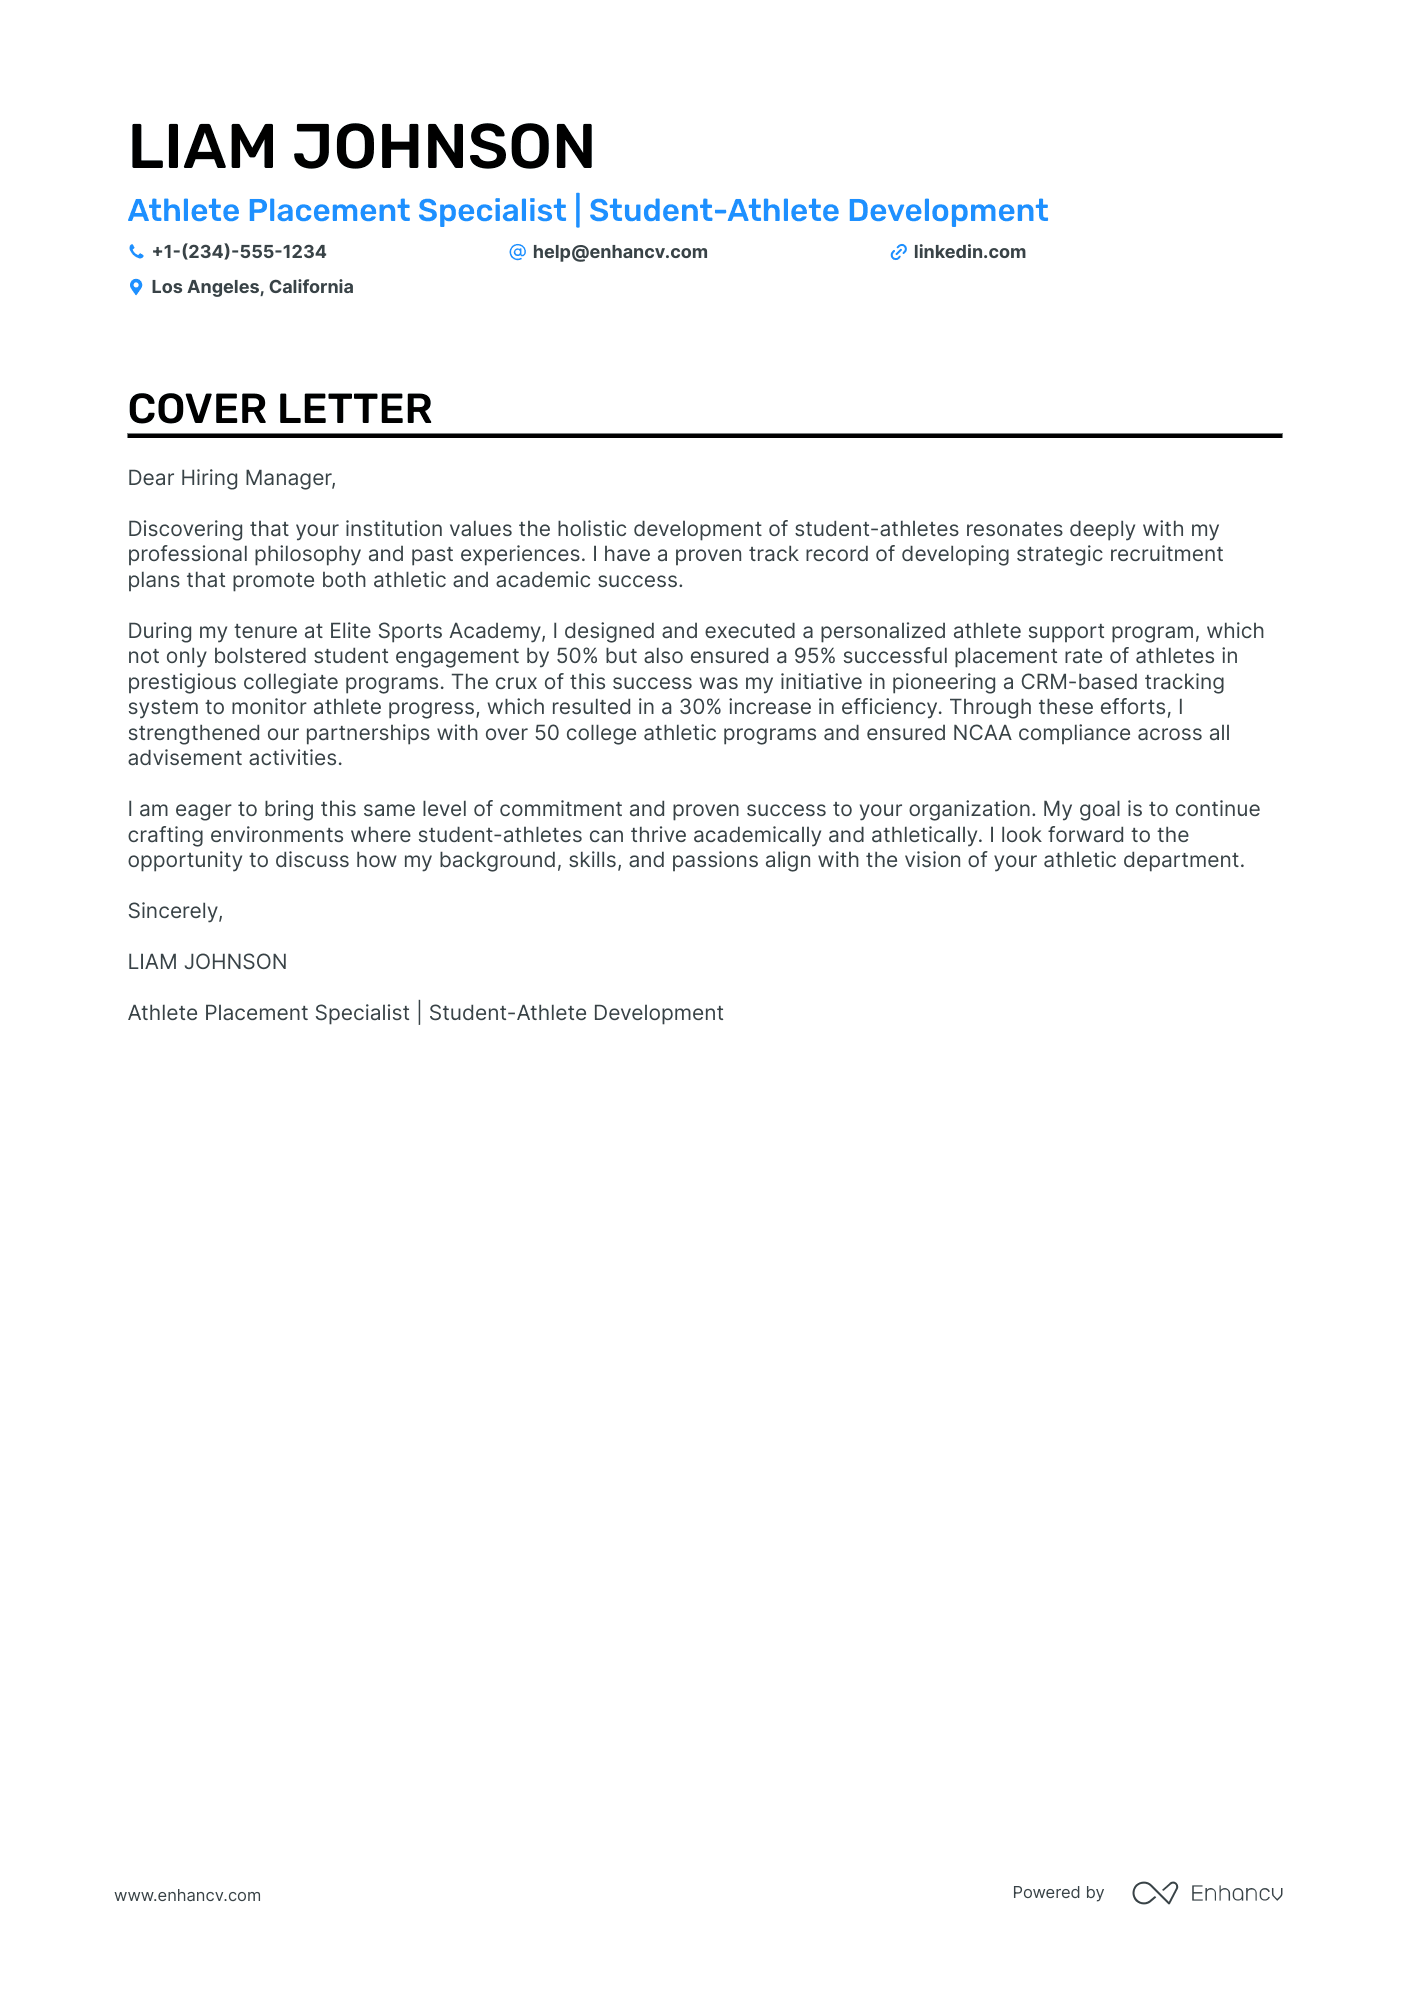 Athlete cover letter